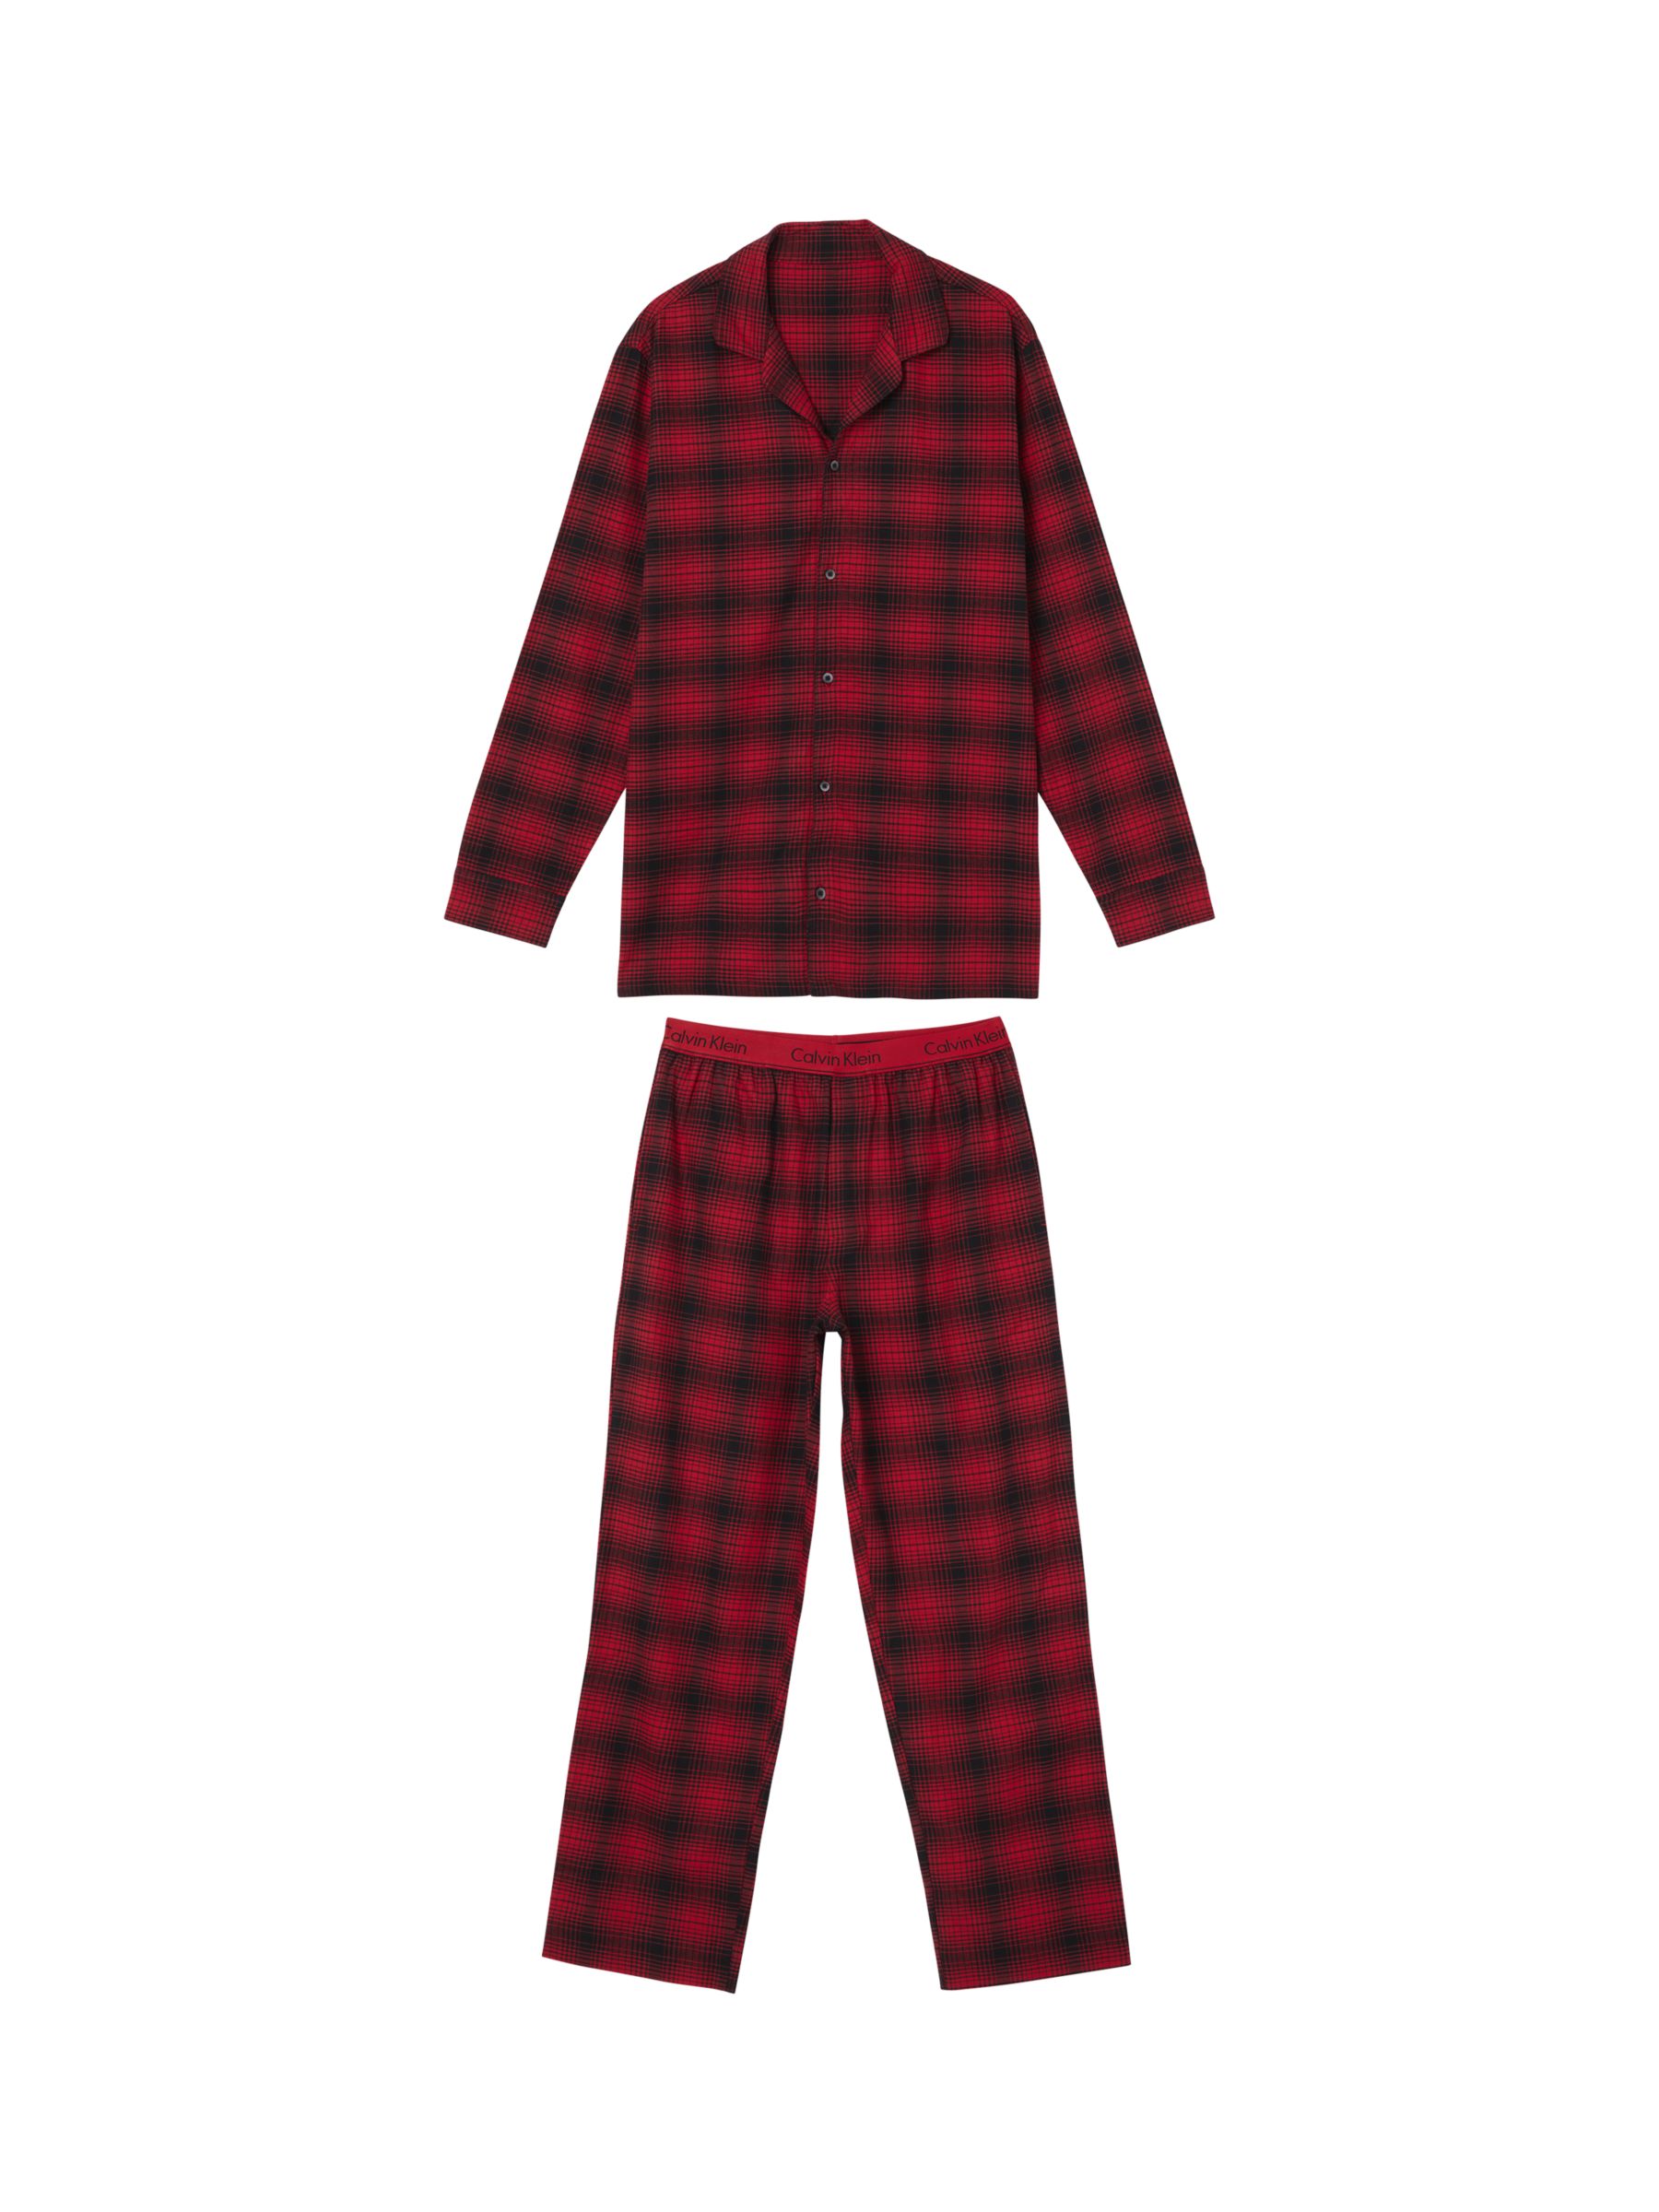 Calvin Klein Flannel Check Pyjama Set, Red Shadow Plaid